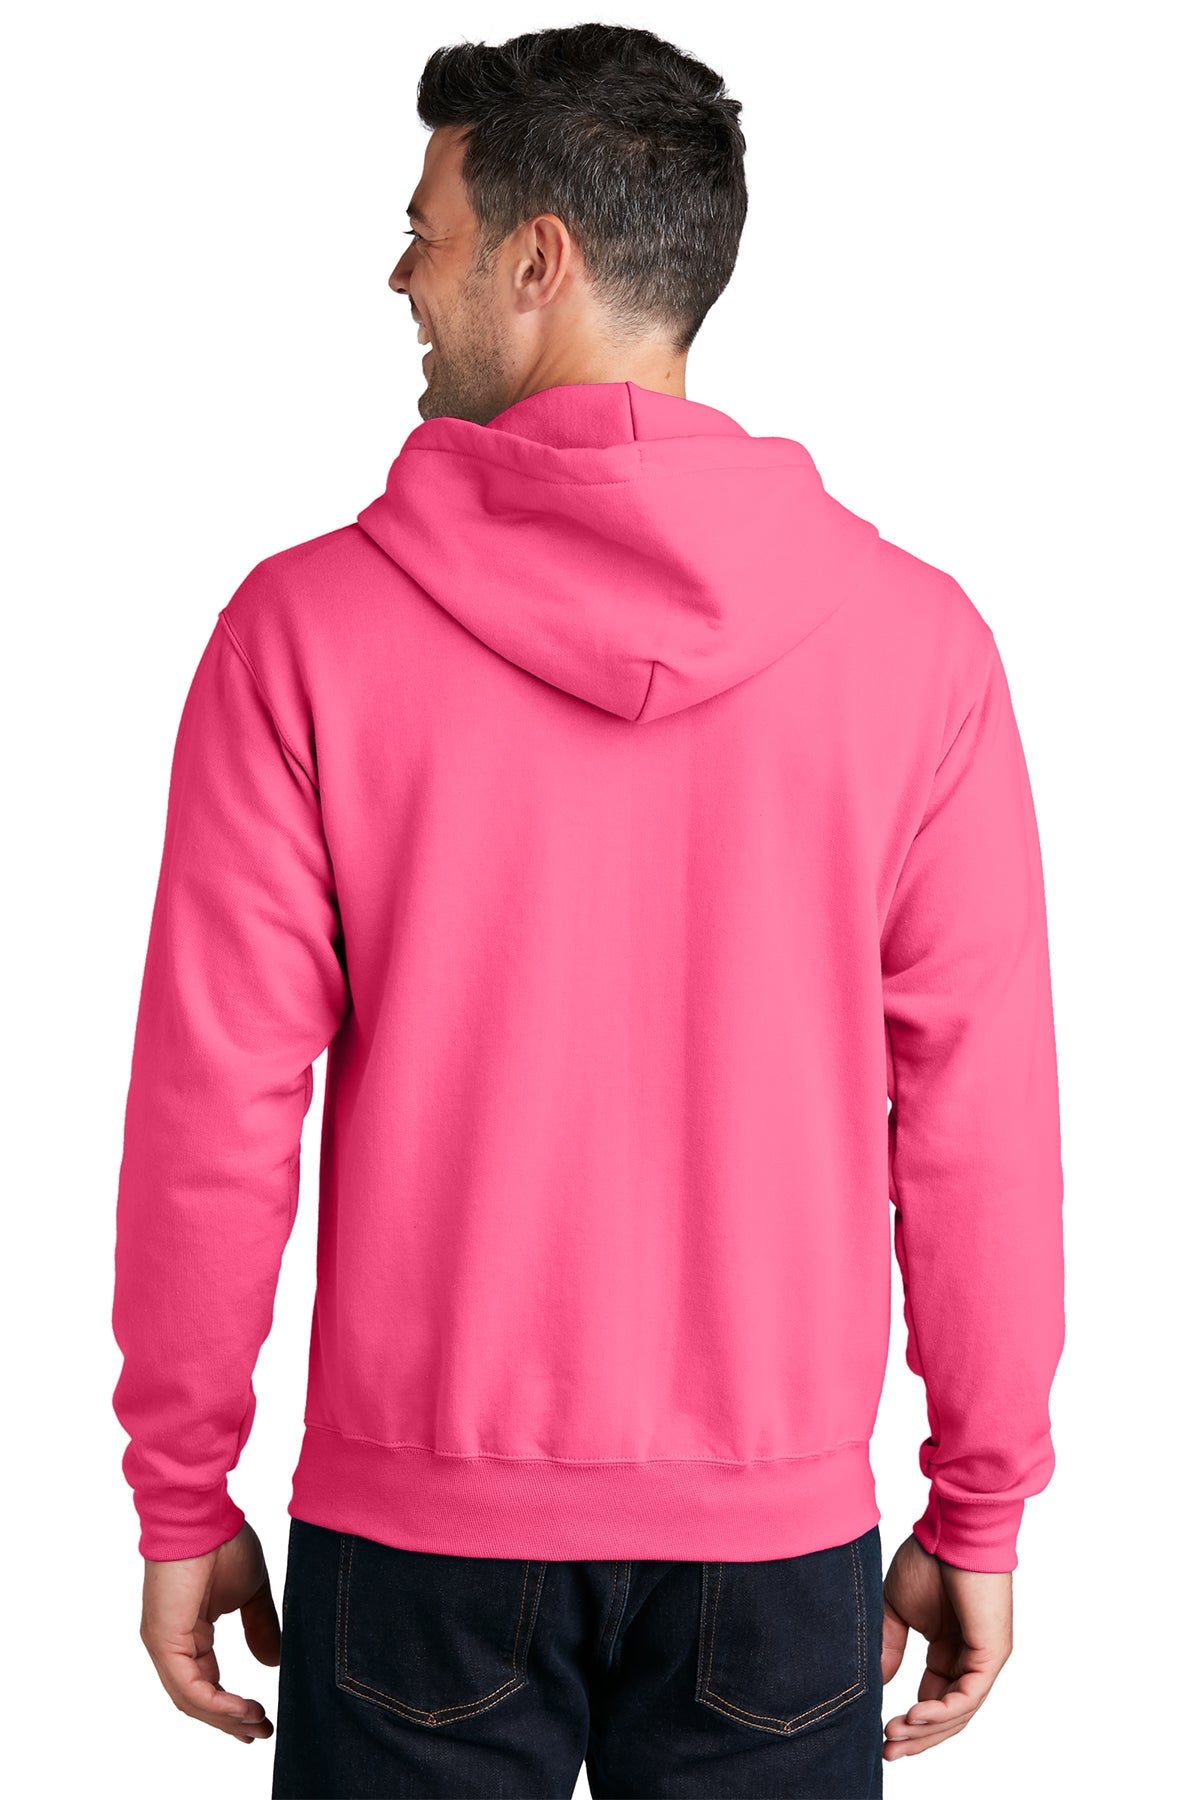 port & company_pc78zh _neon pink_company_logo_sweatshirts